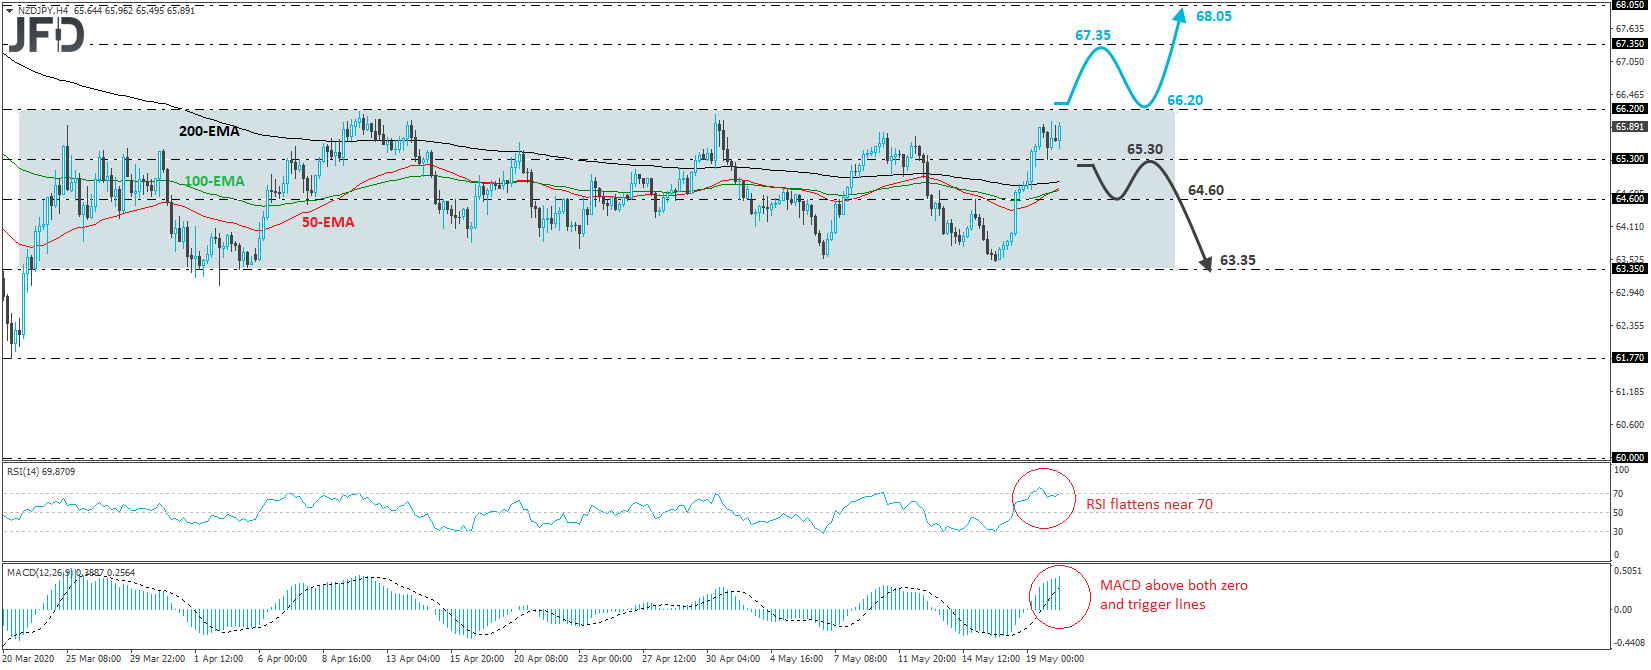 NZD/JPY 4-hour chart technical analysis